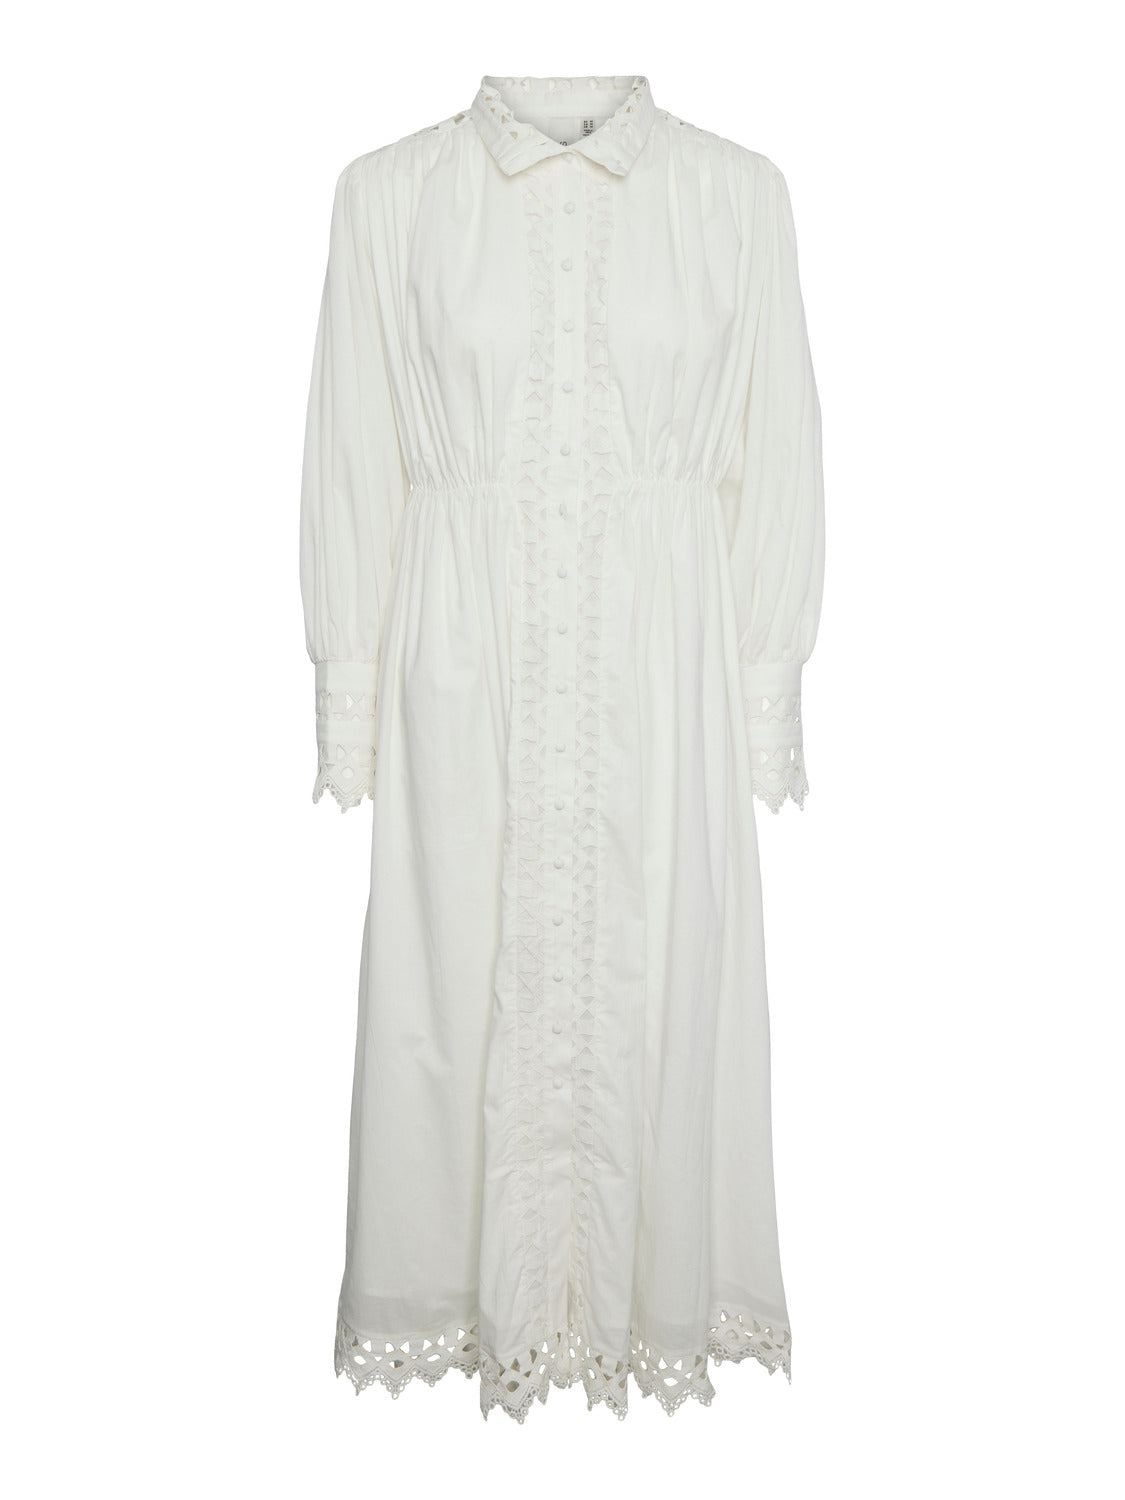 YASTRIMA Dress - Star White